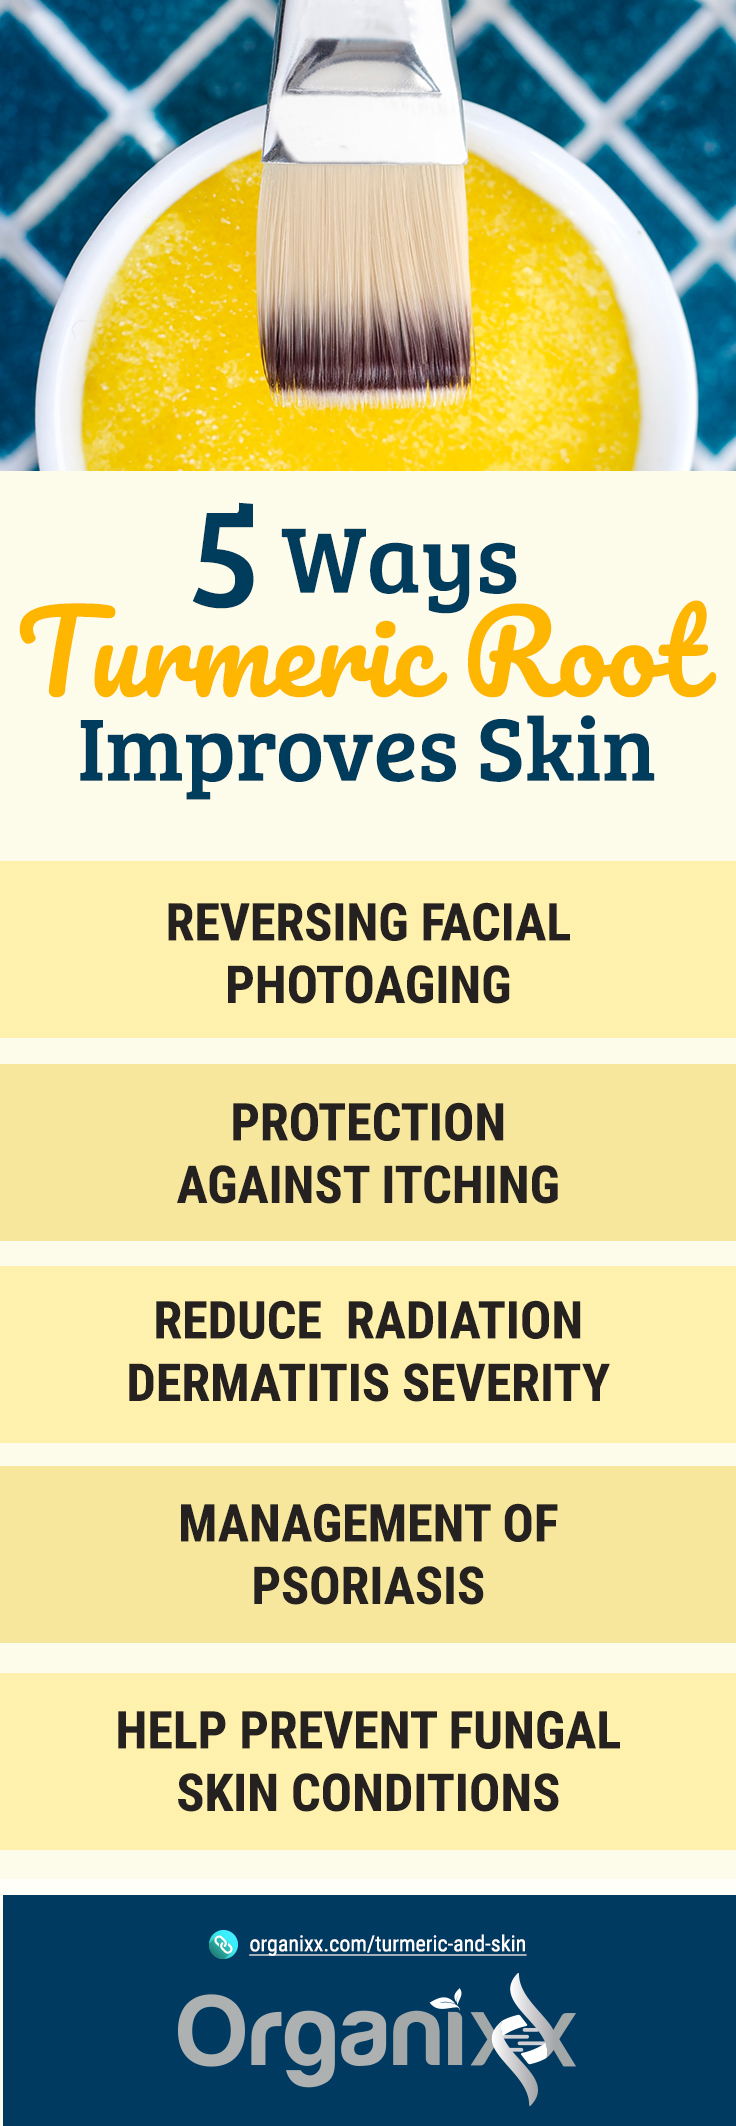 5 Ways Turmeric Improves Skin